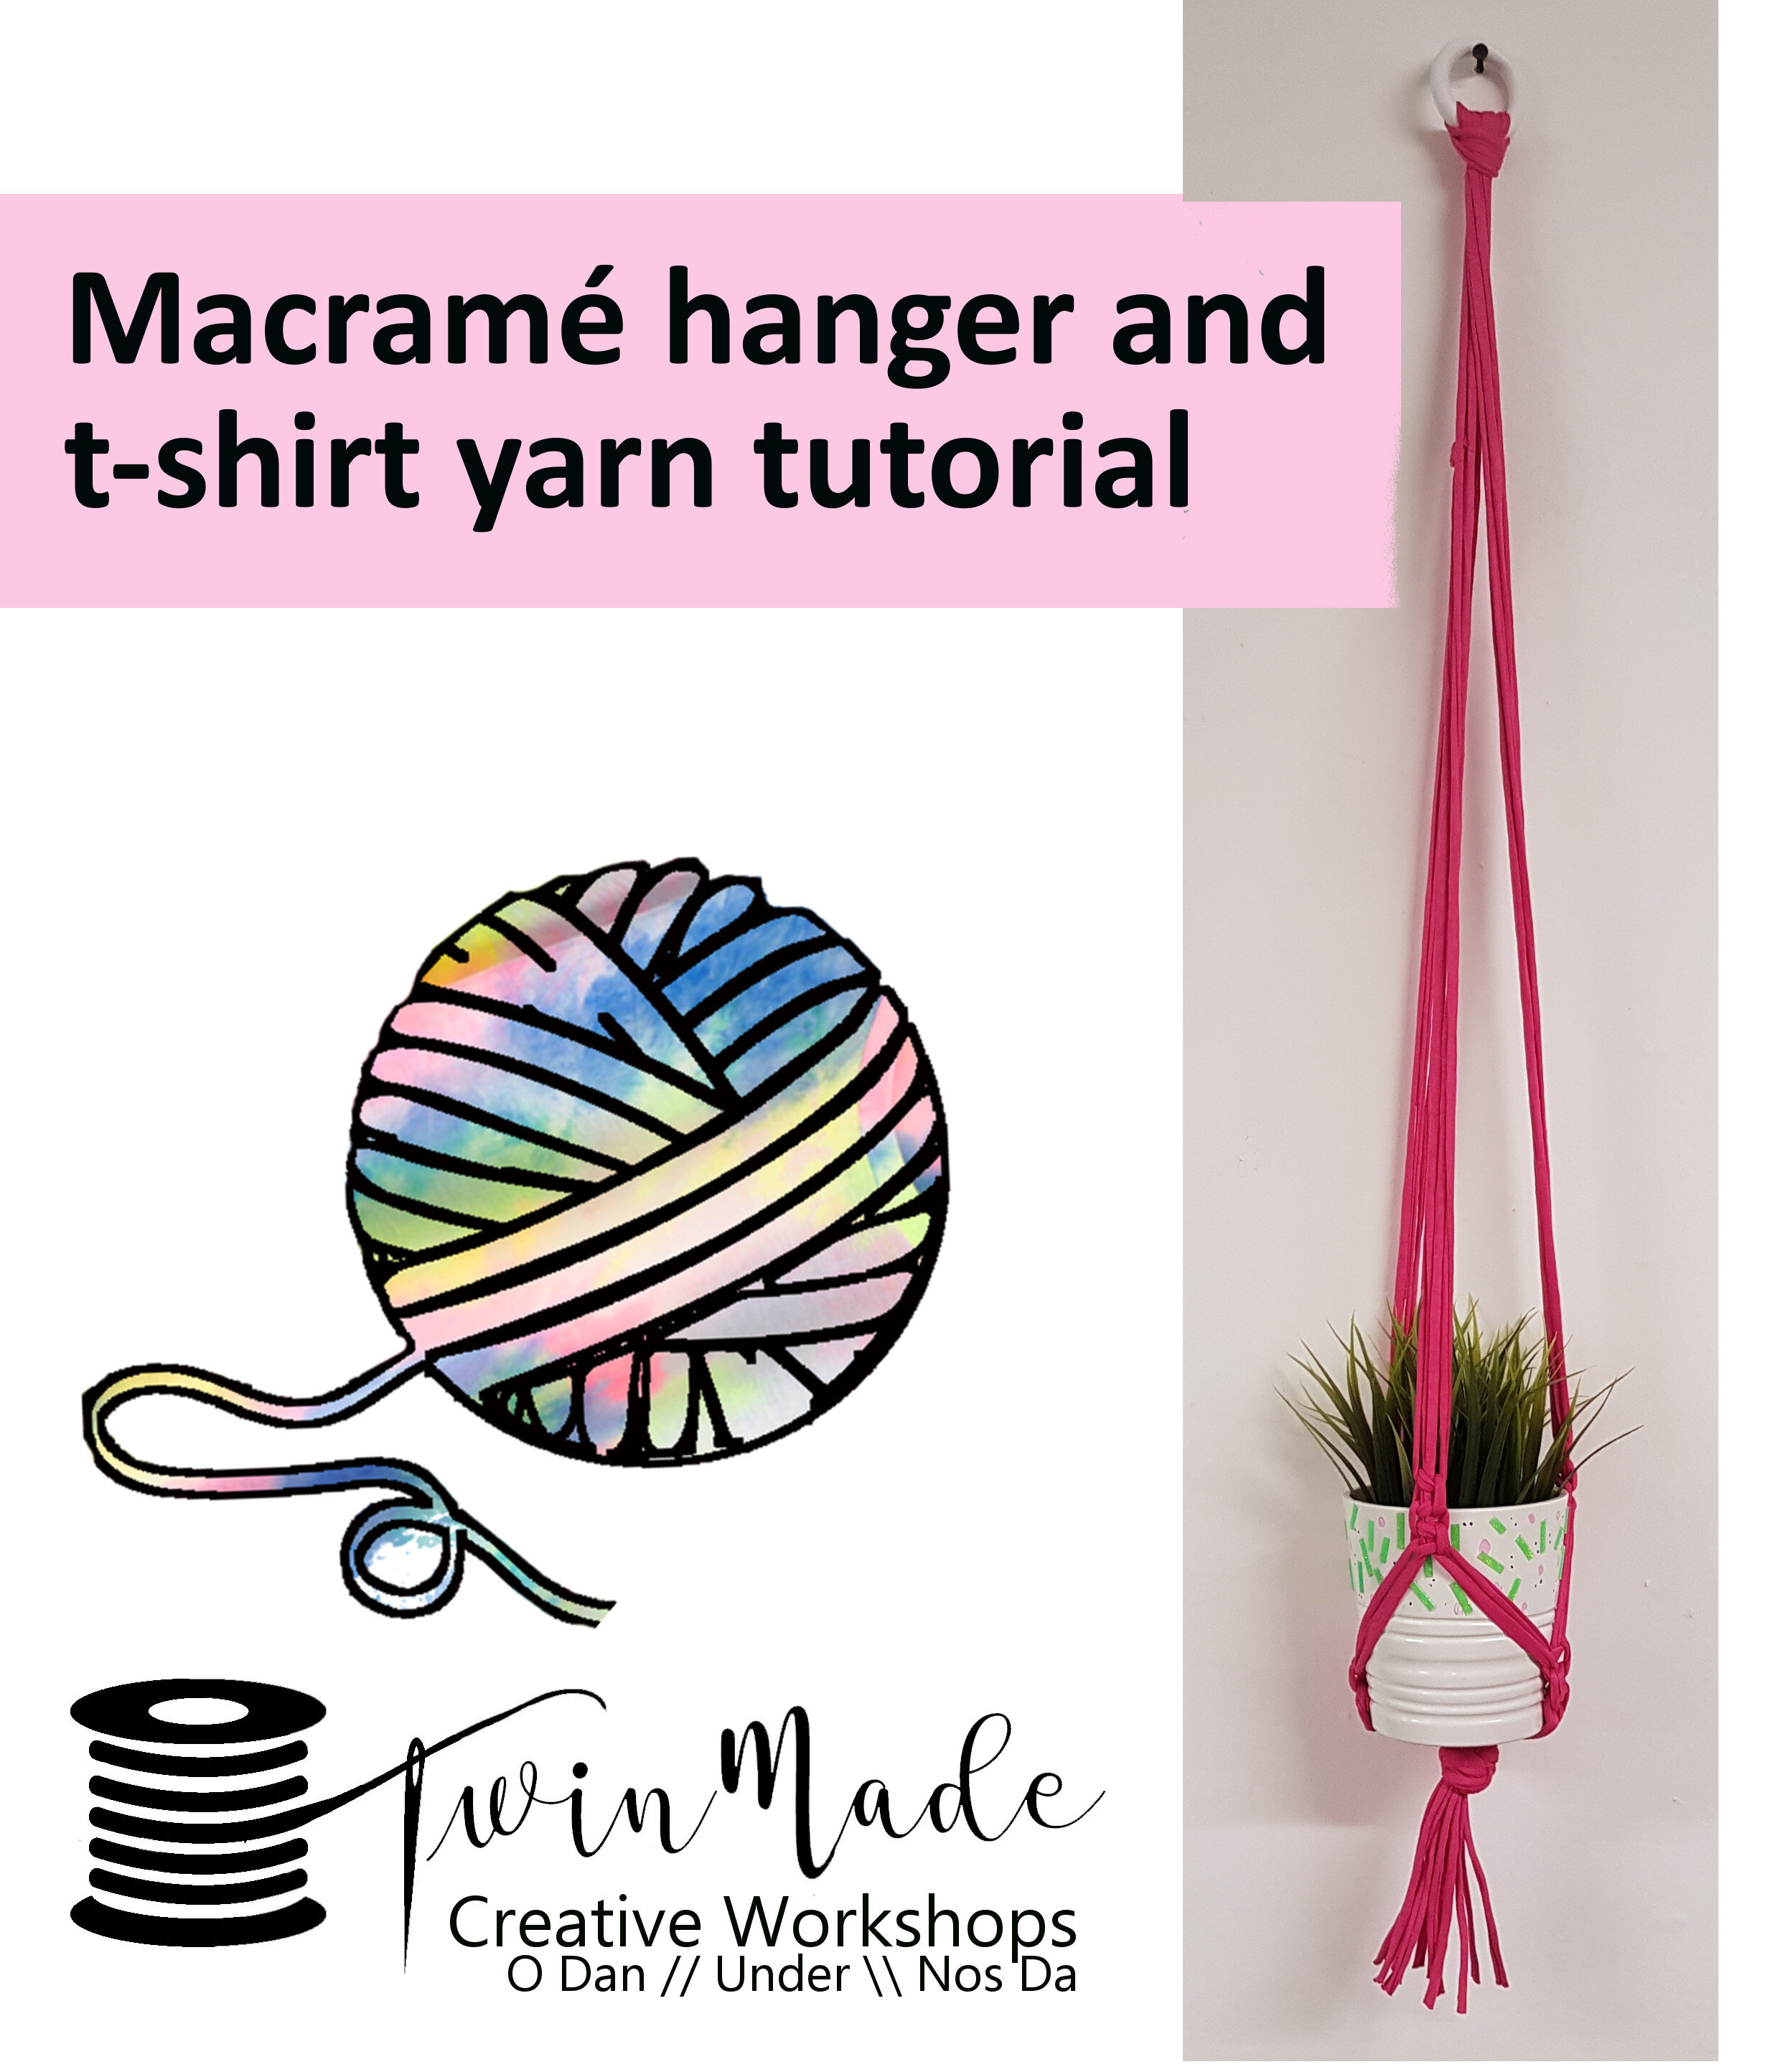 Hanger and Yarn Tutorial Ad.jpg